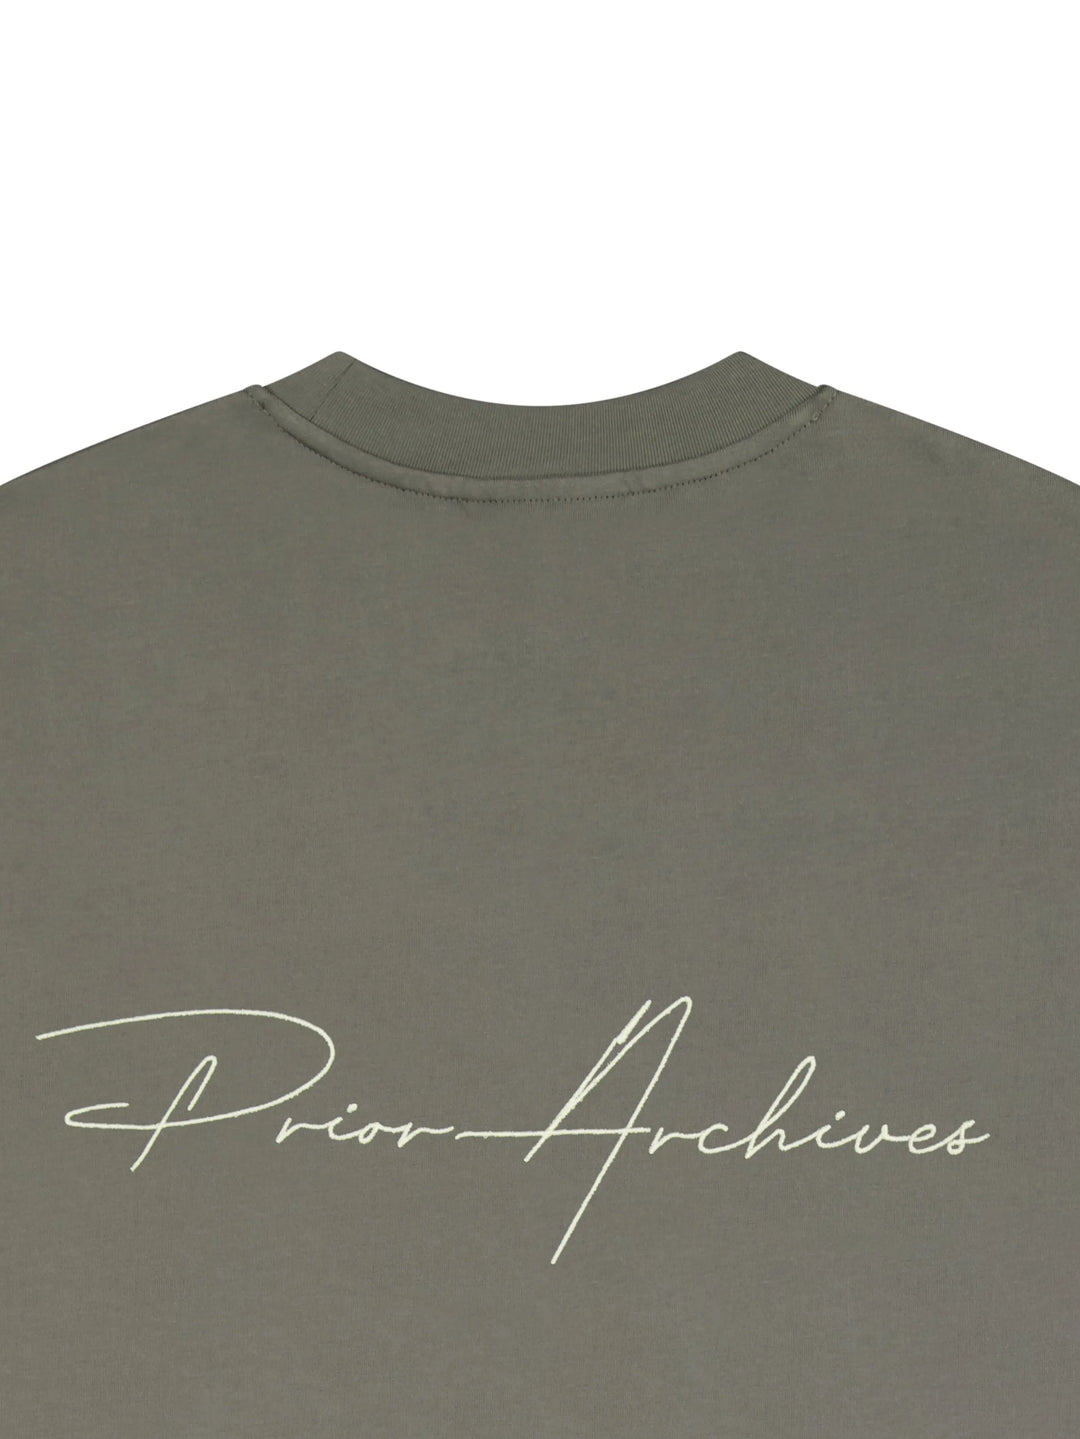 Prior Embroidery Logo Oversized T-shirt Medium Olive in Melbourne, Australia - Prior